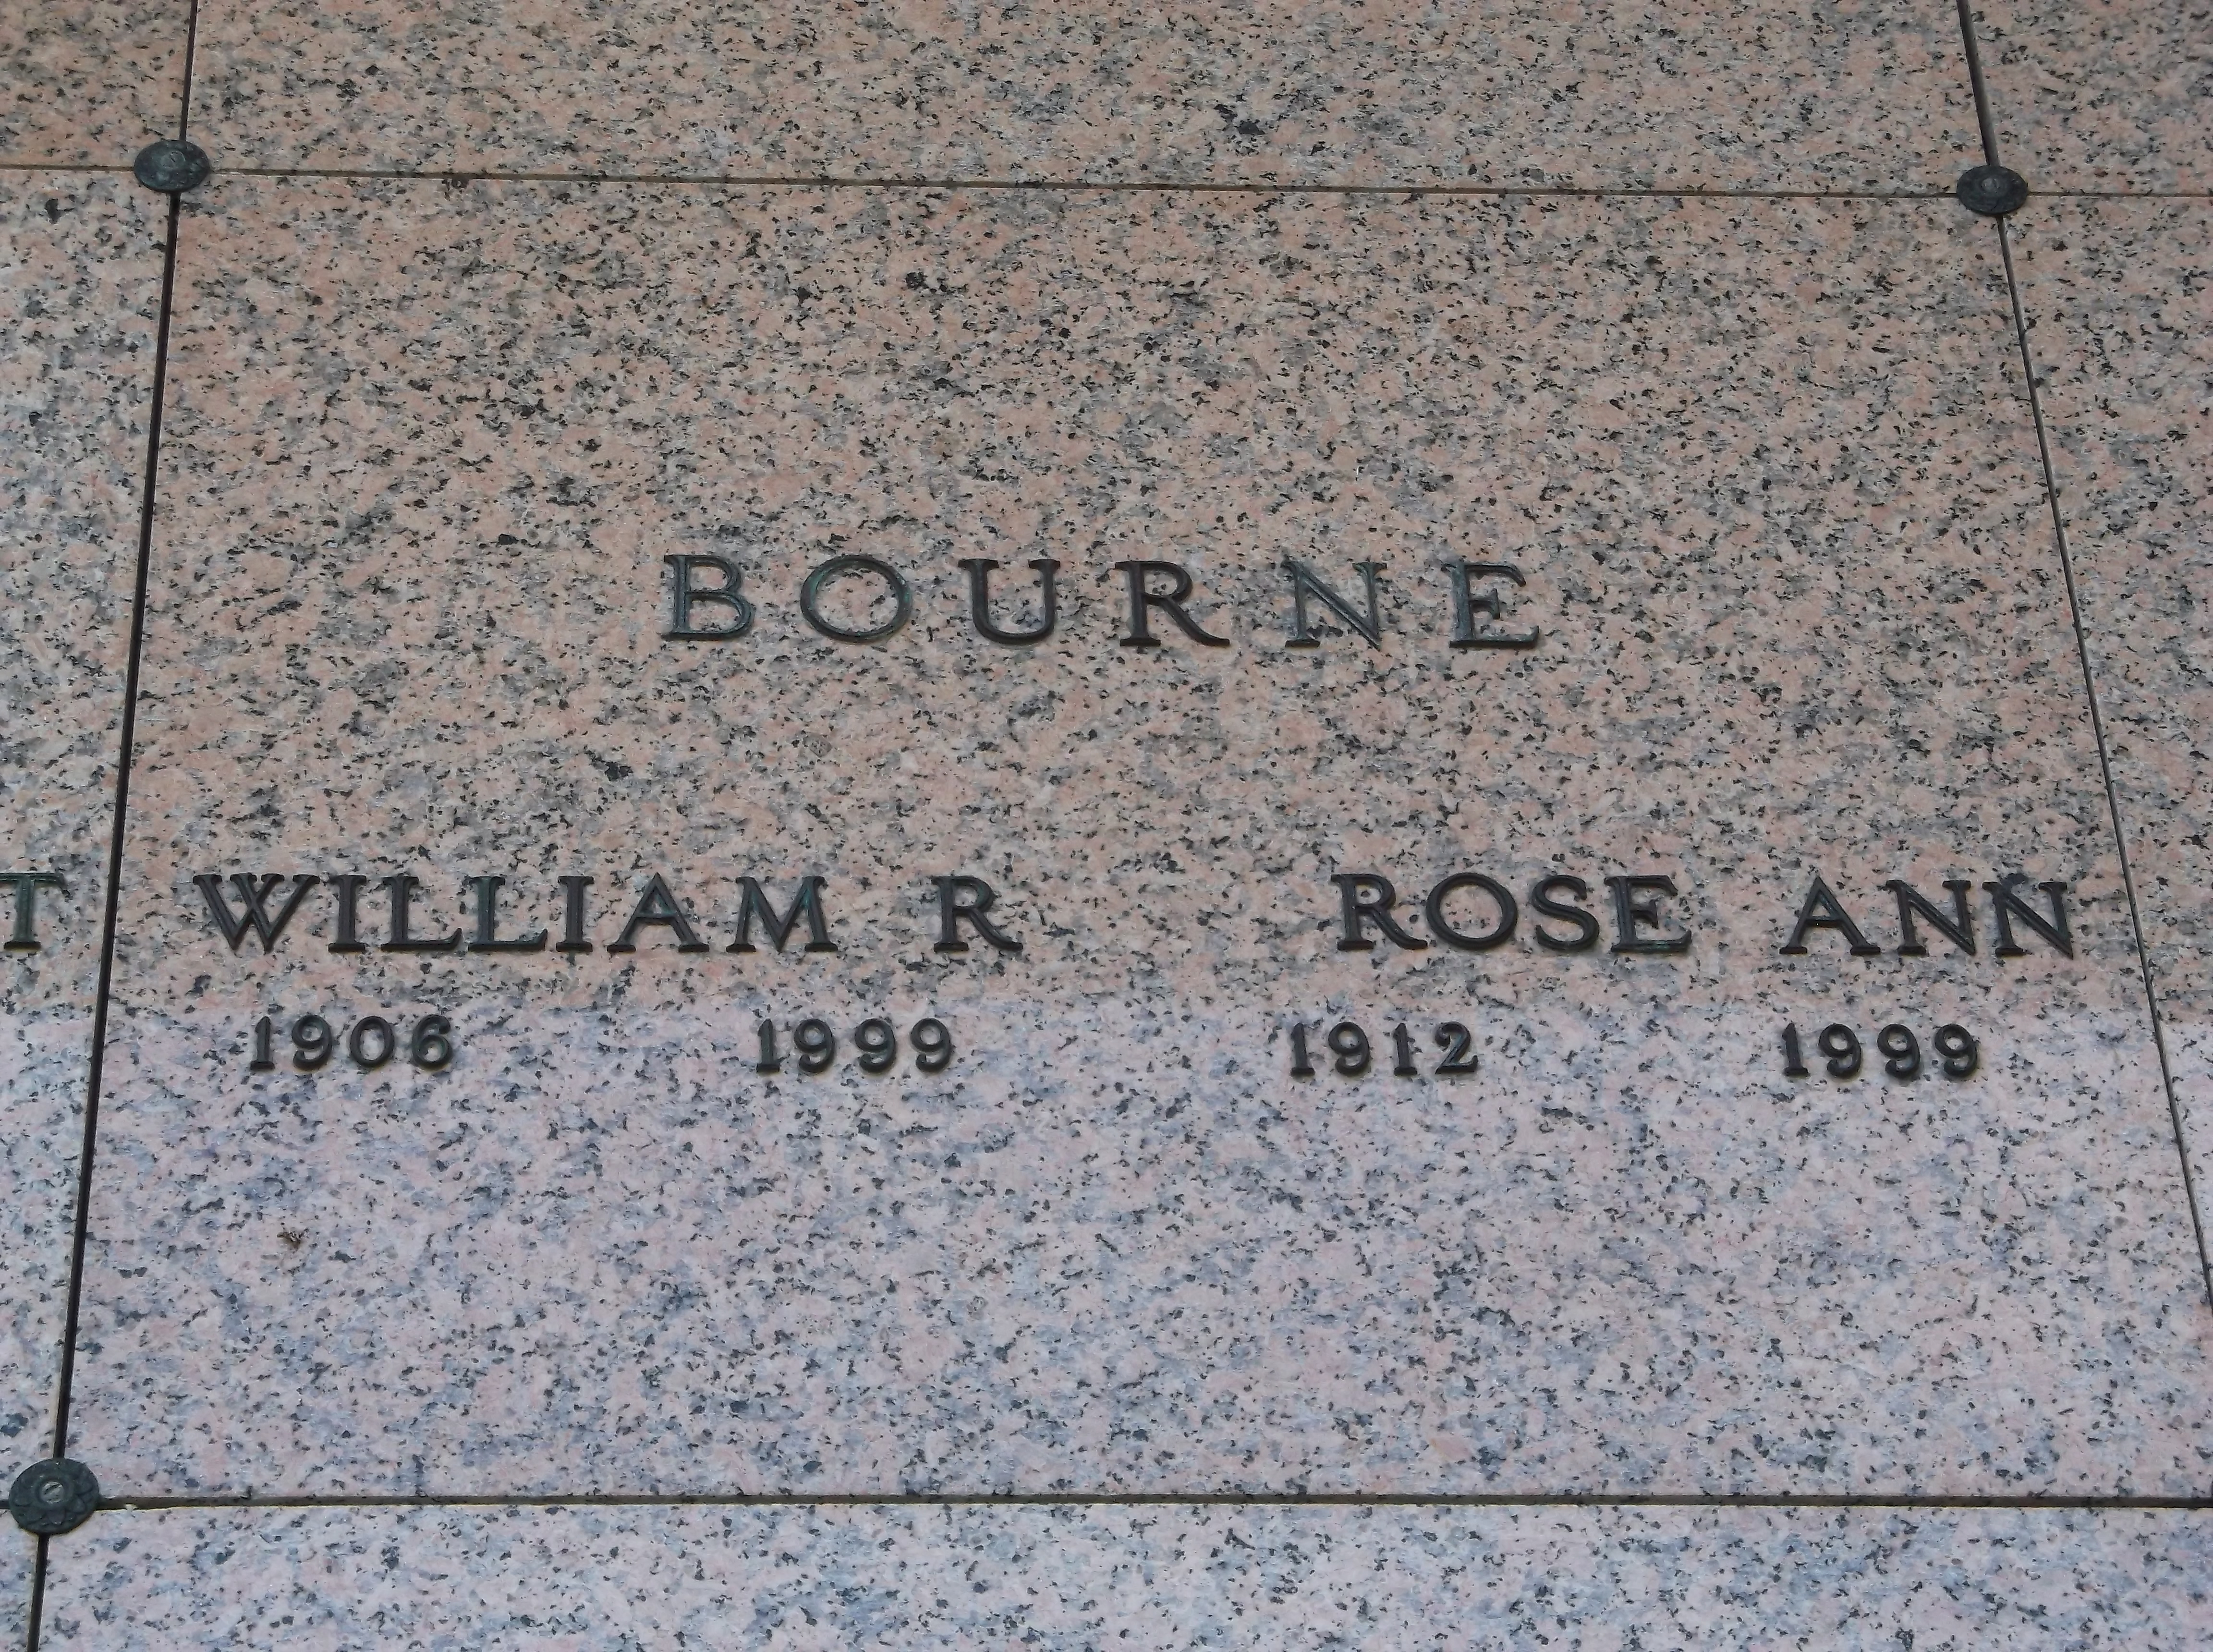 Rose Ann Bourne